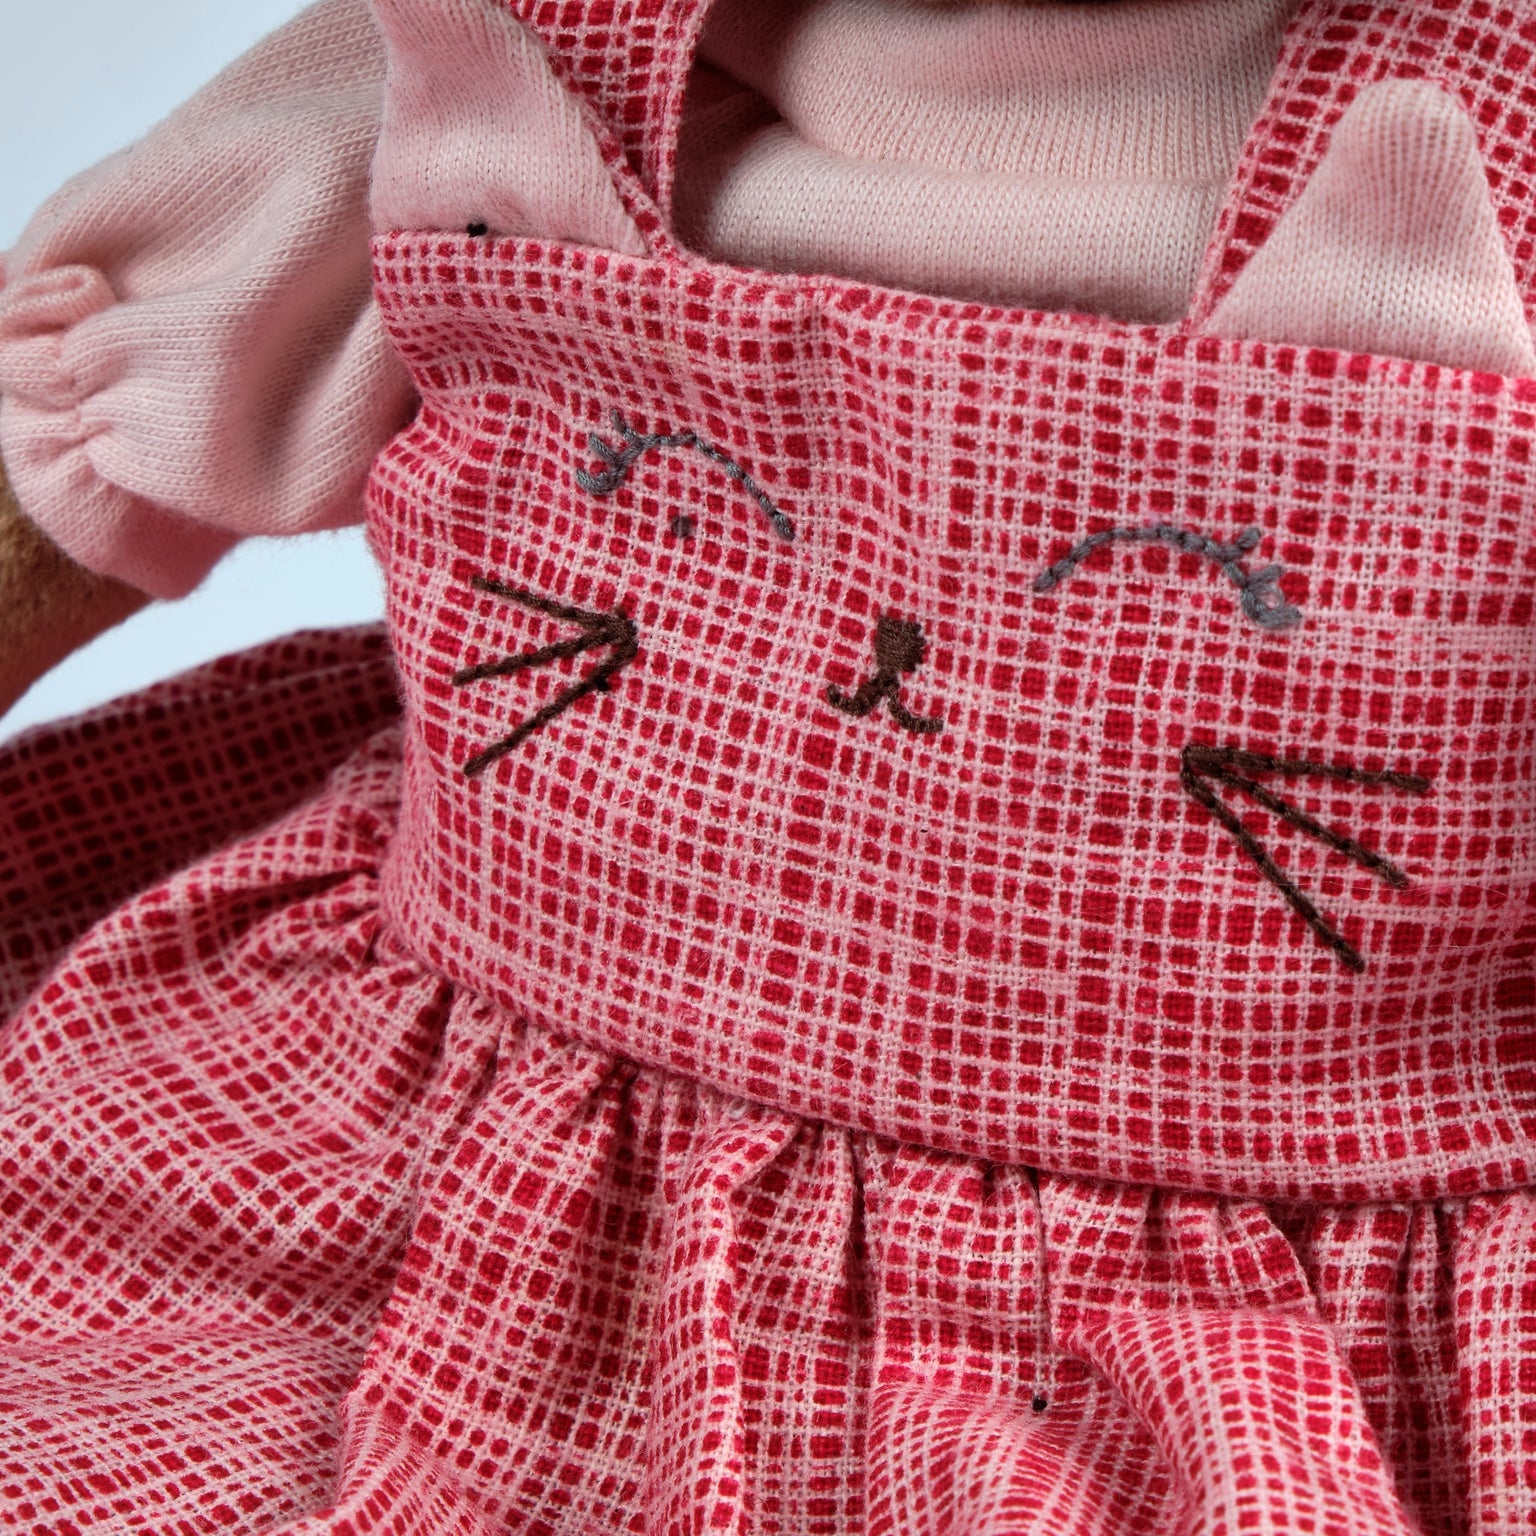 Madison Girl Doll in Red Dress - Twinkle Twinkle Little One